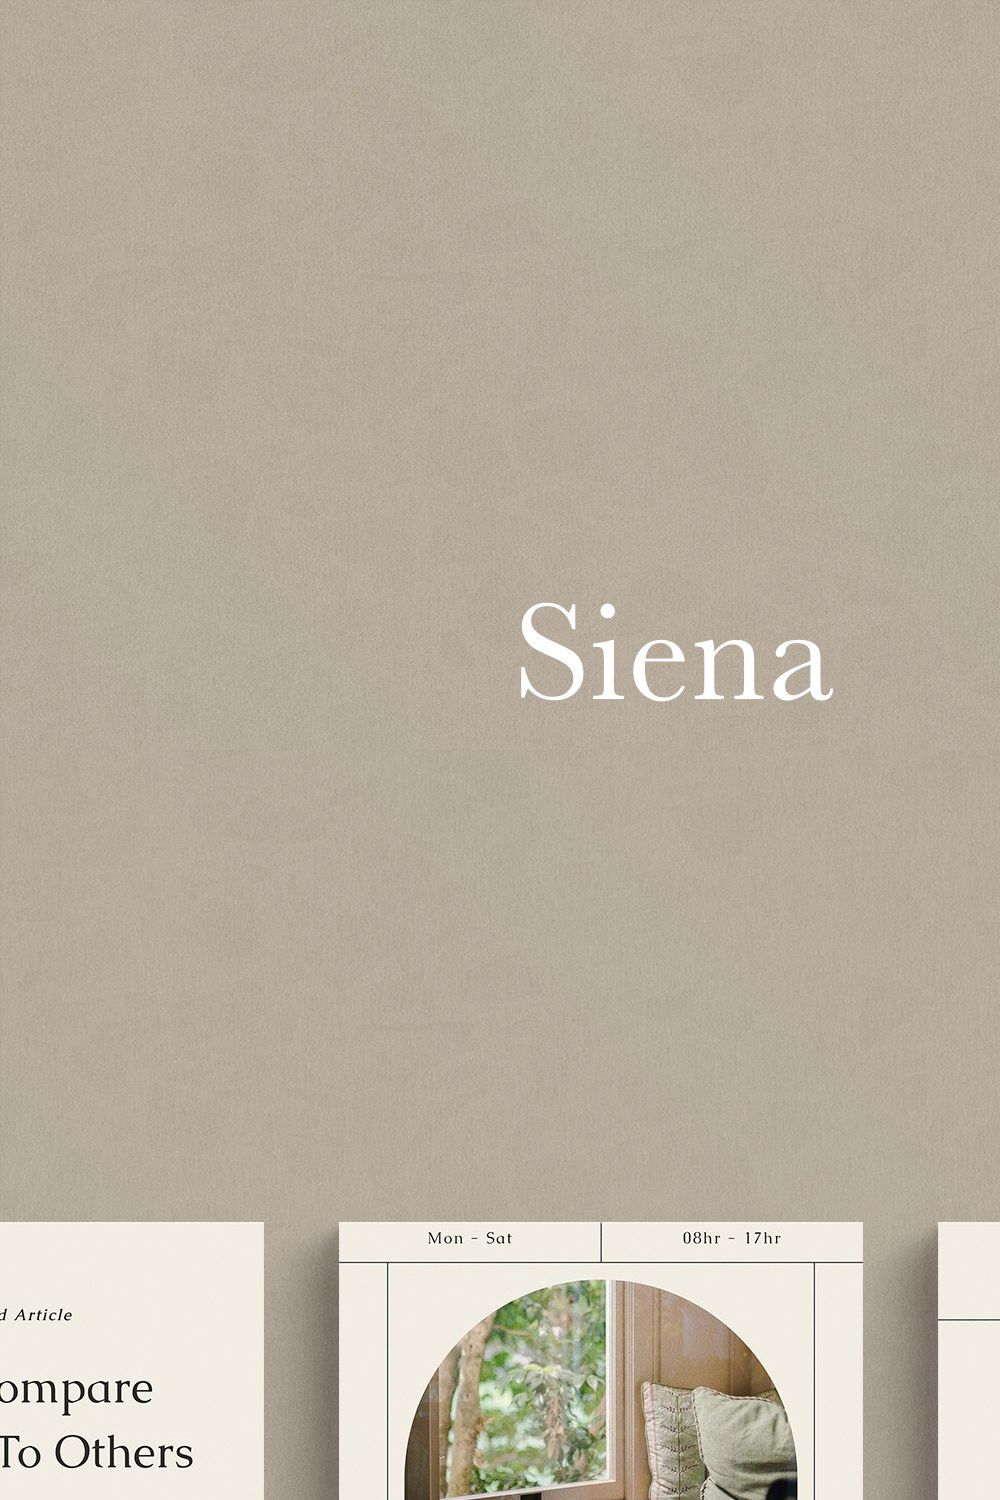 Siena Social Media Pack pinterest preview image.